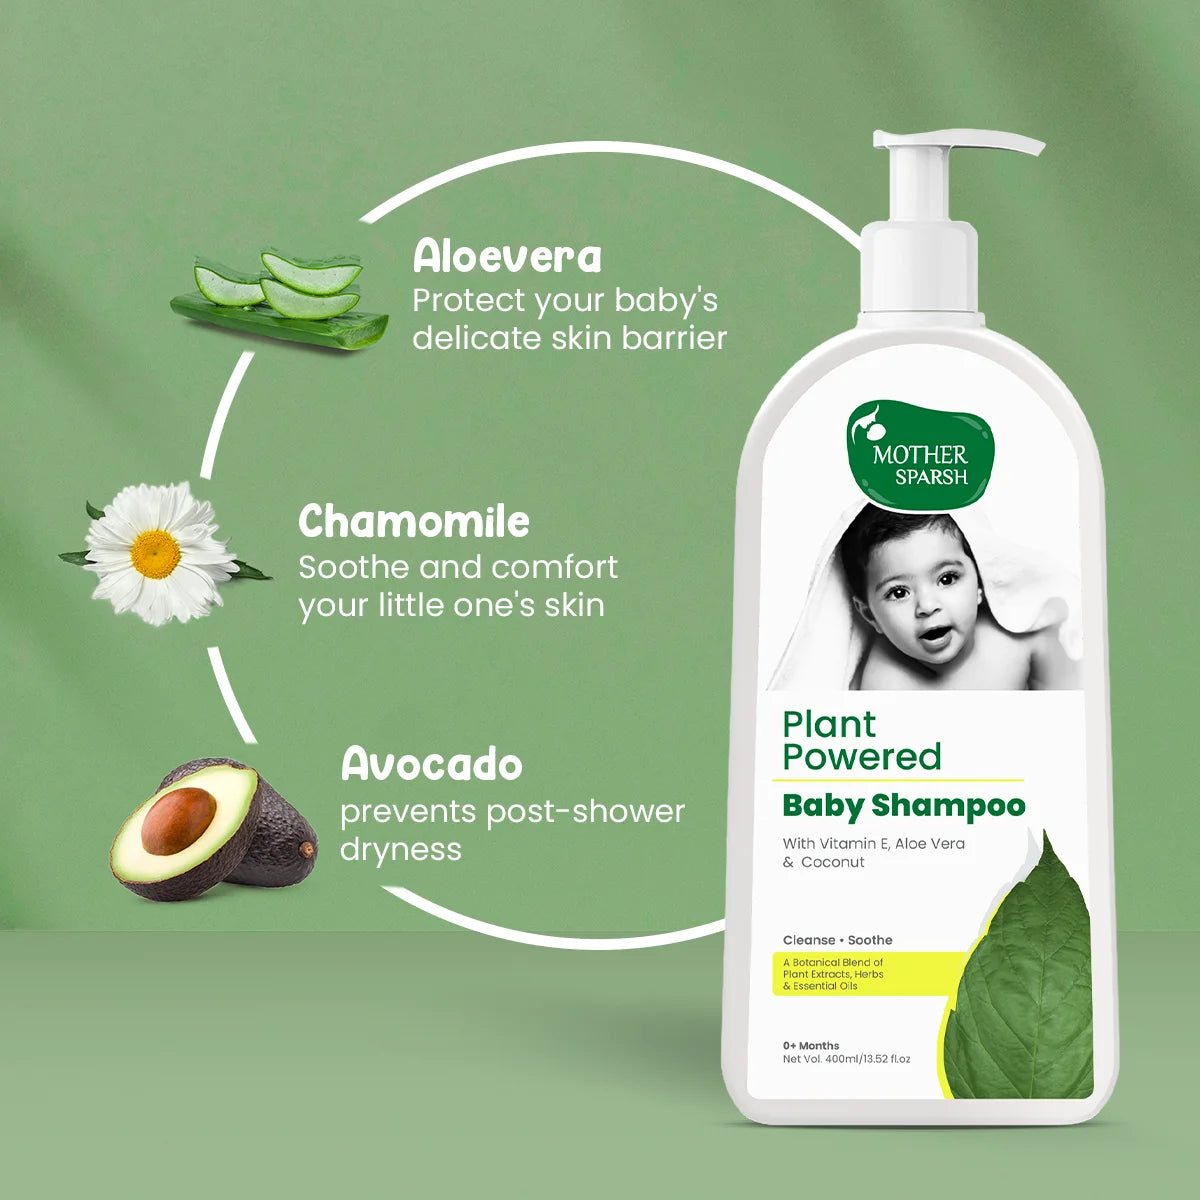 Plant Powered Baby Shampoo